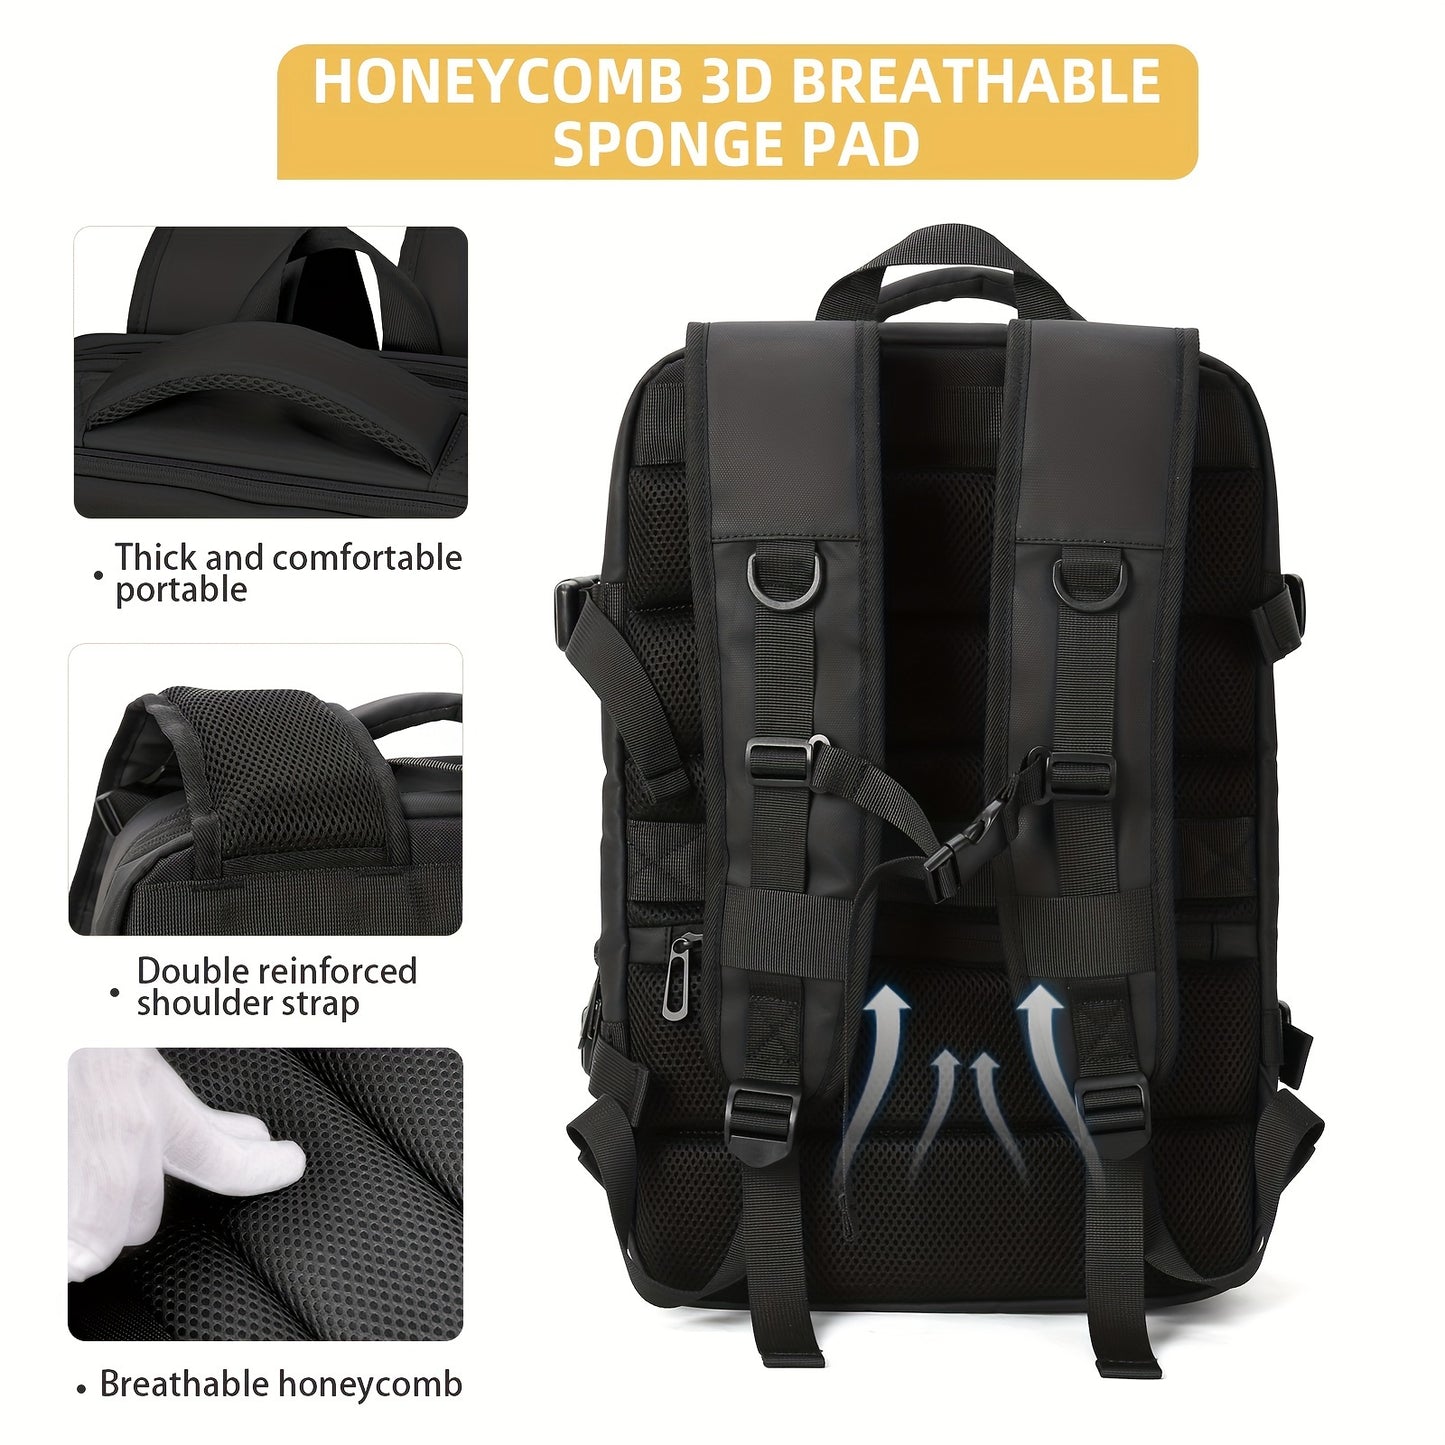 1pc Men's Travel Backpack, Short-distance Business Trip Bag, Lightweight Large Capacity Computer Backpack, Nylon Luggage Bag